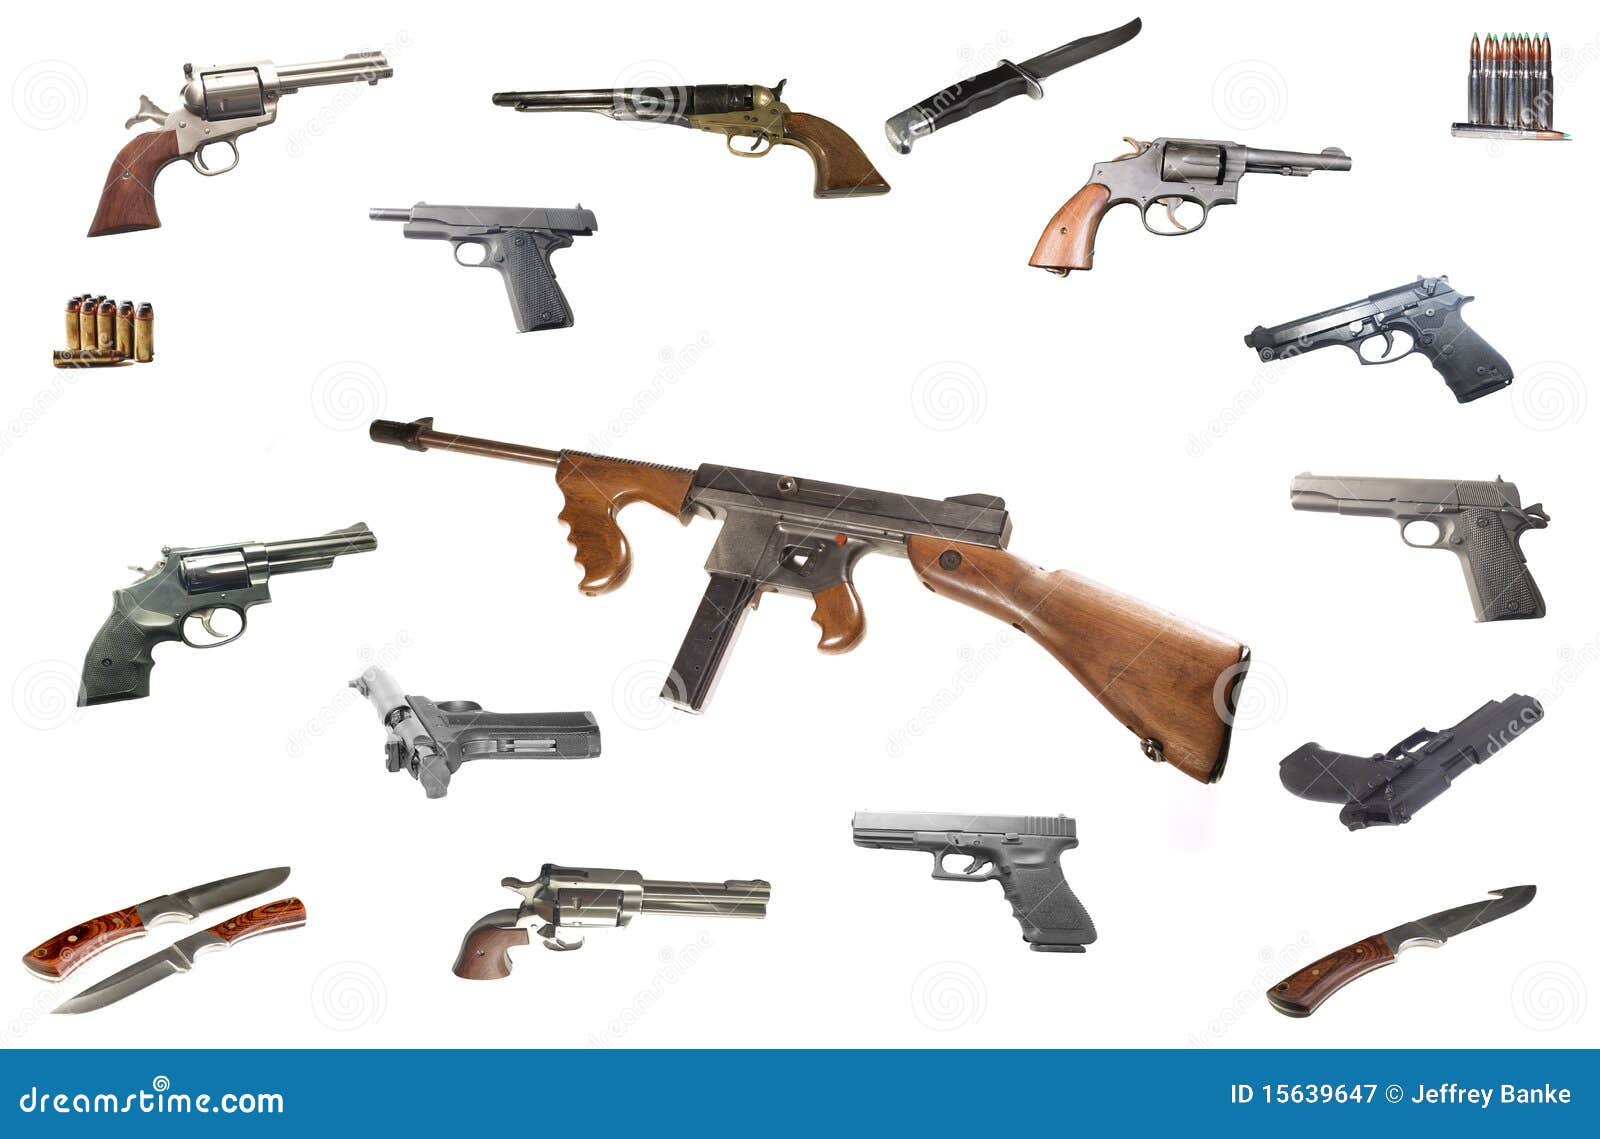 Thompson machine gun stock image. Image of weapon, firearm ...